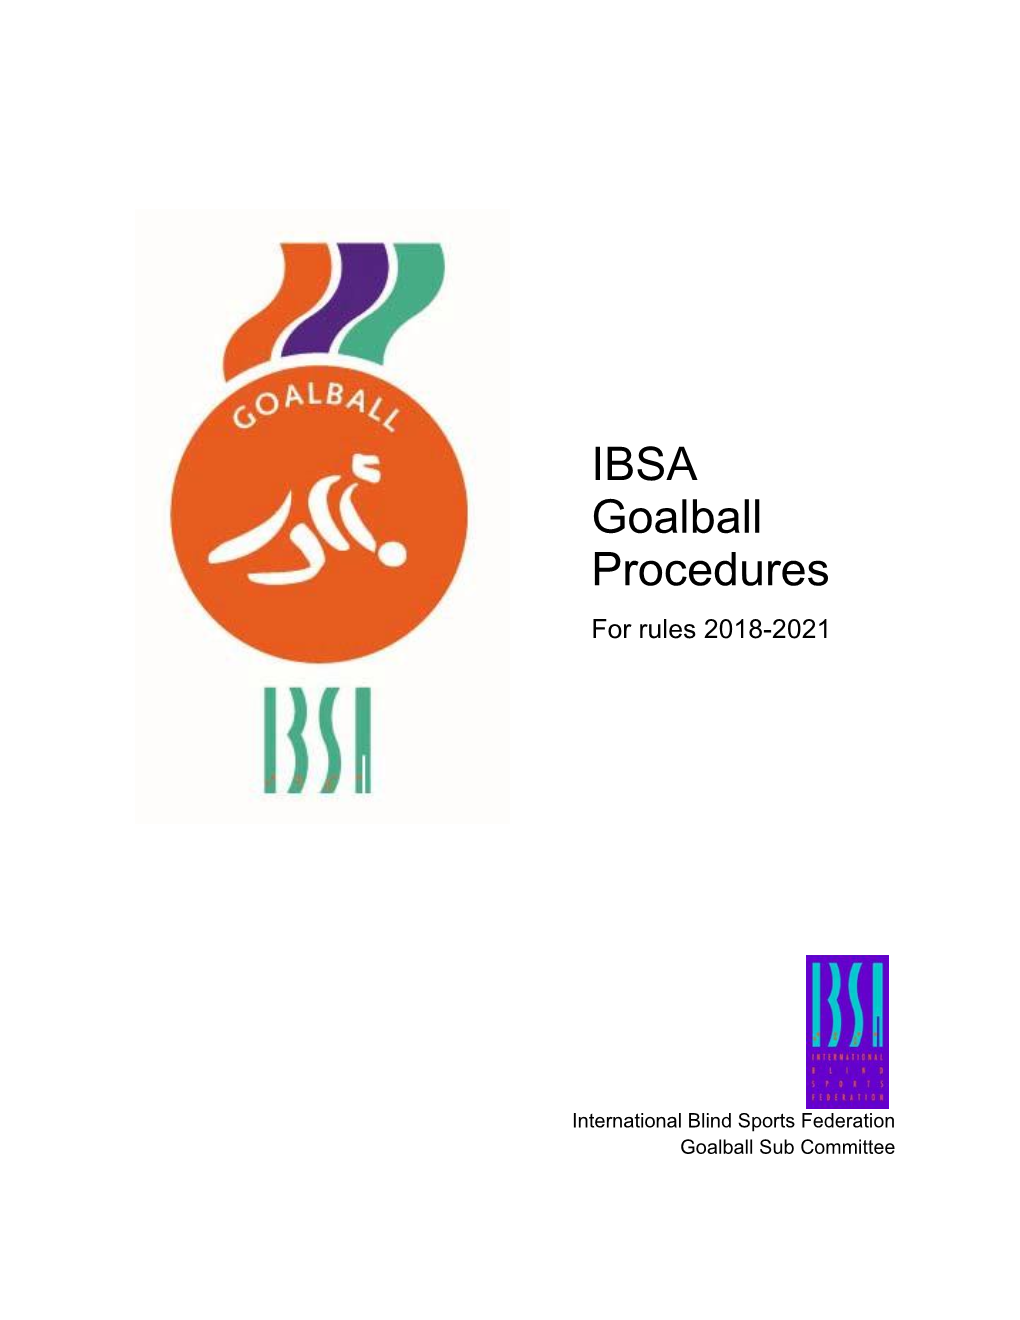 IBSA Goalball Procedures Manual Download.Pdf